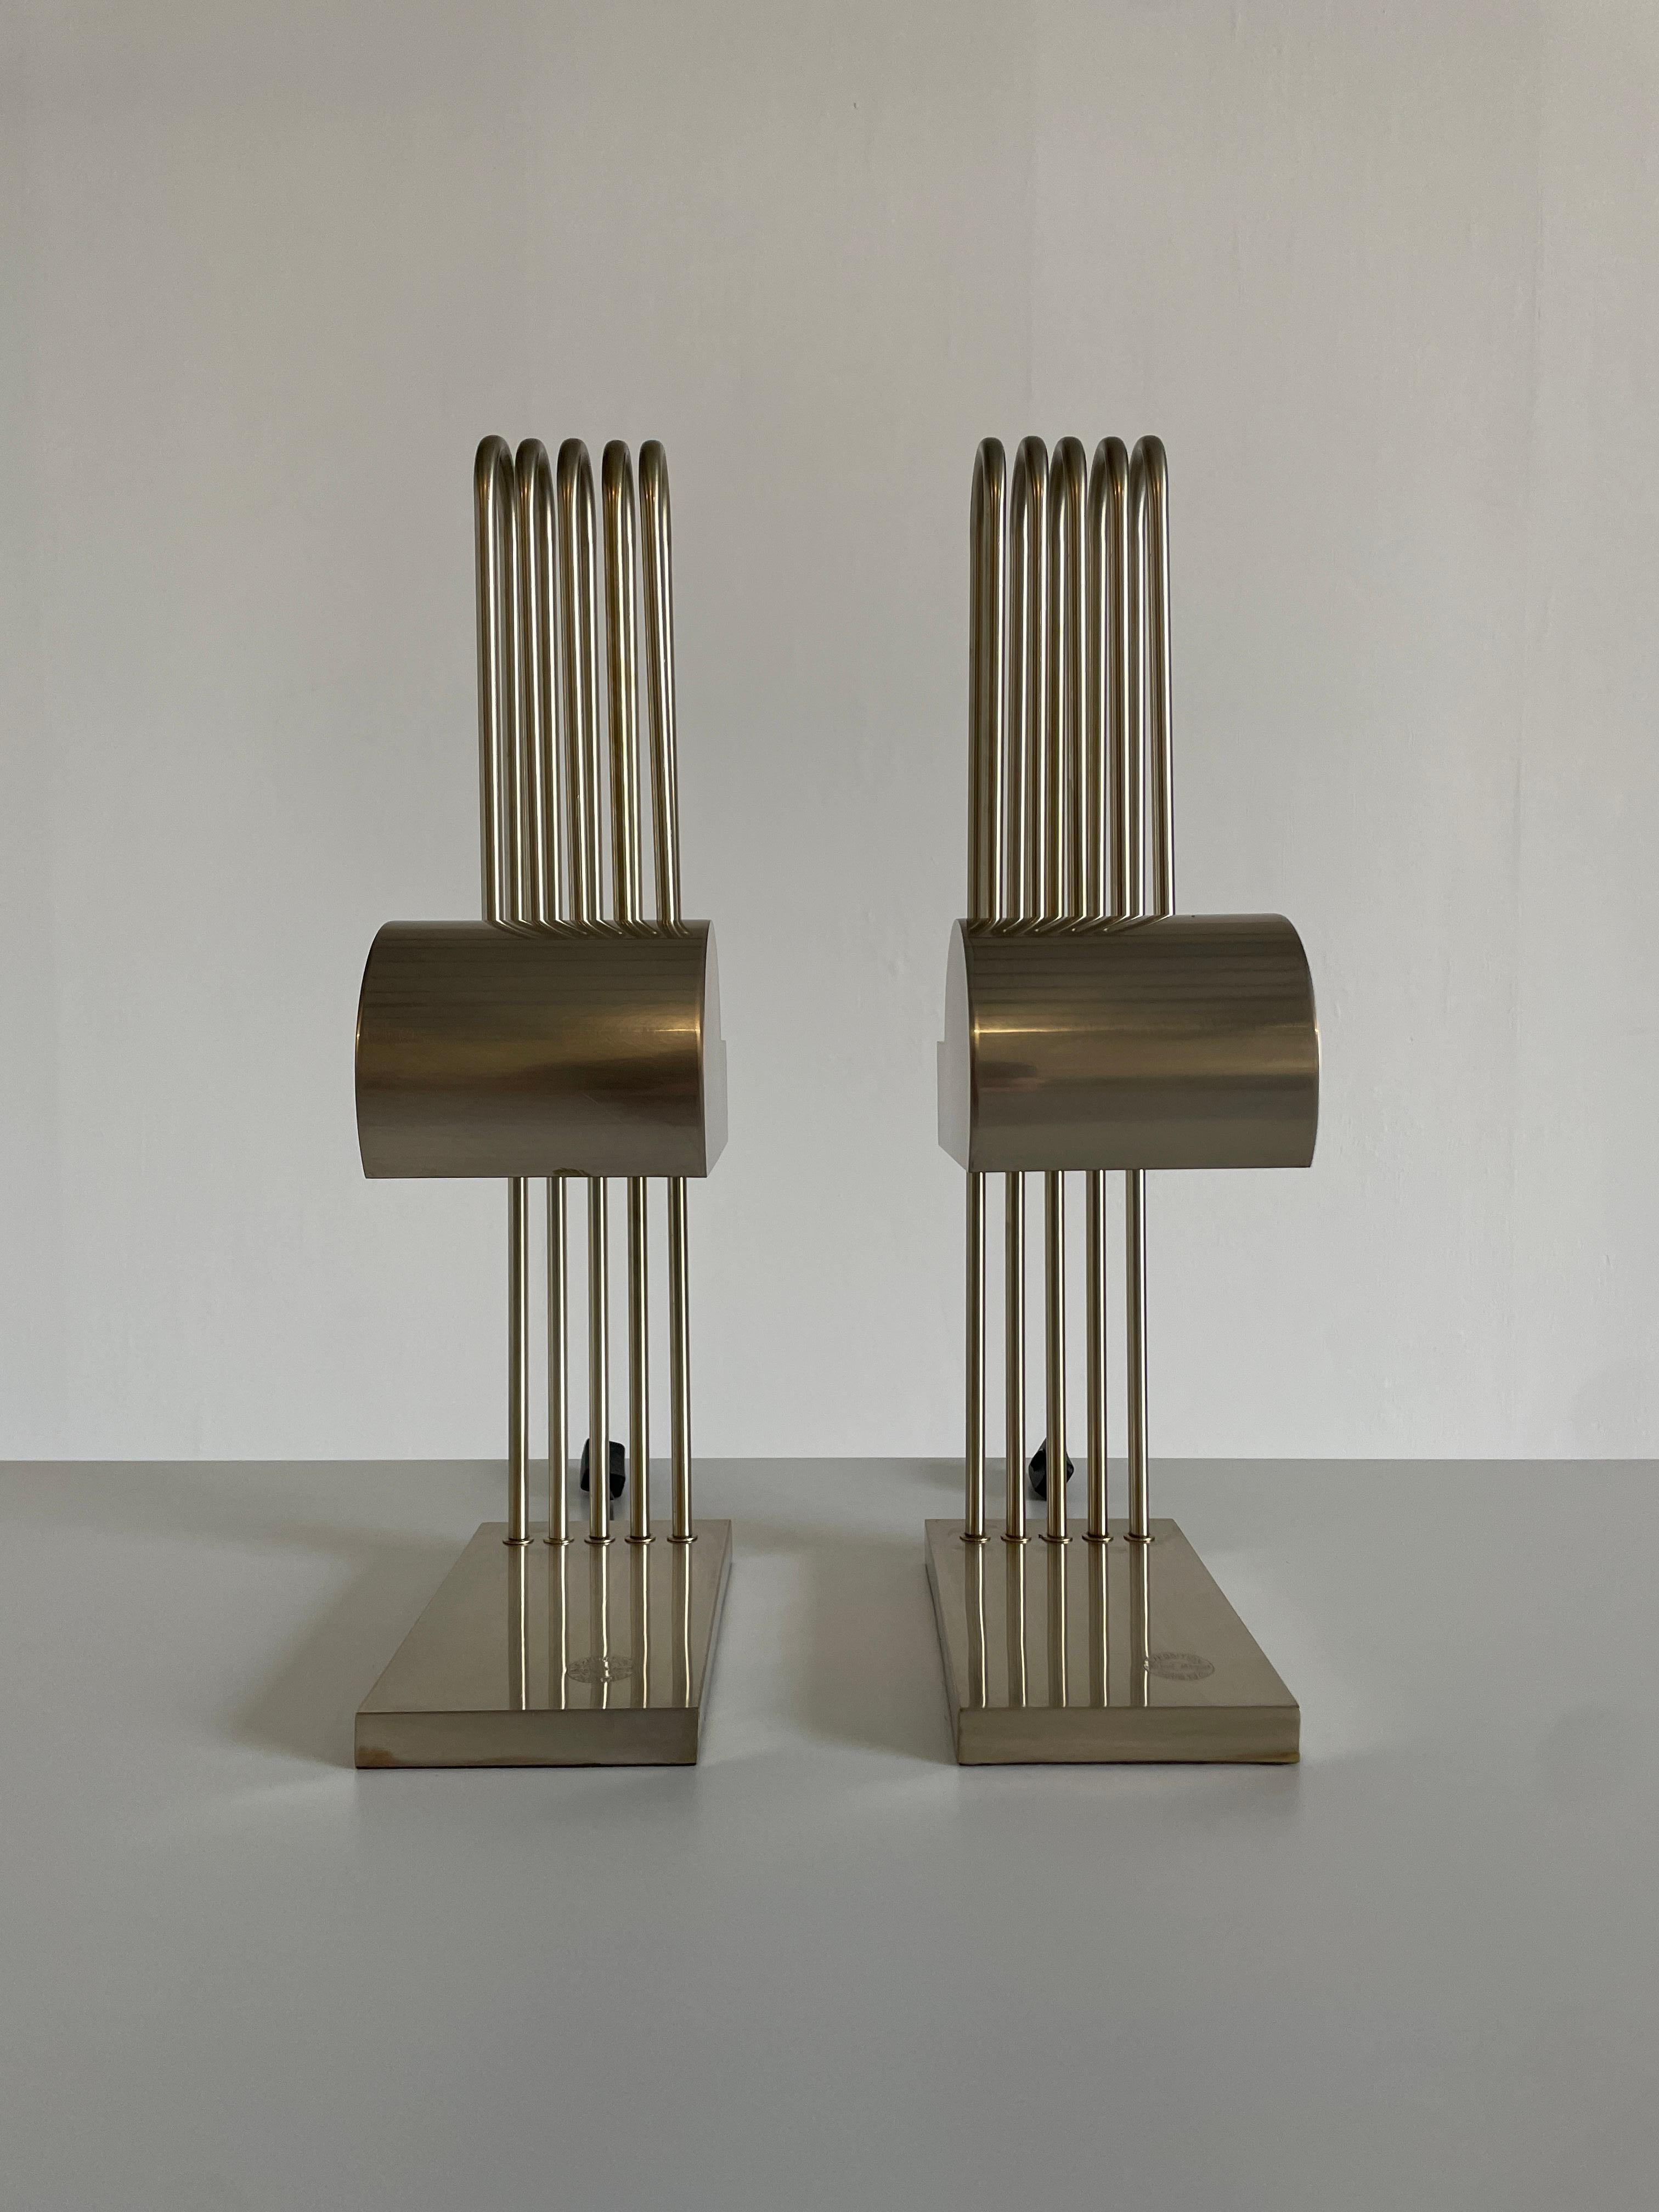 Plated Pair of Marcel Breuer Bauhaus Table Lamps for the Paris Exhibition 1925, France